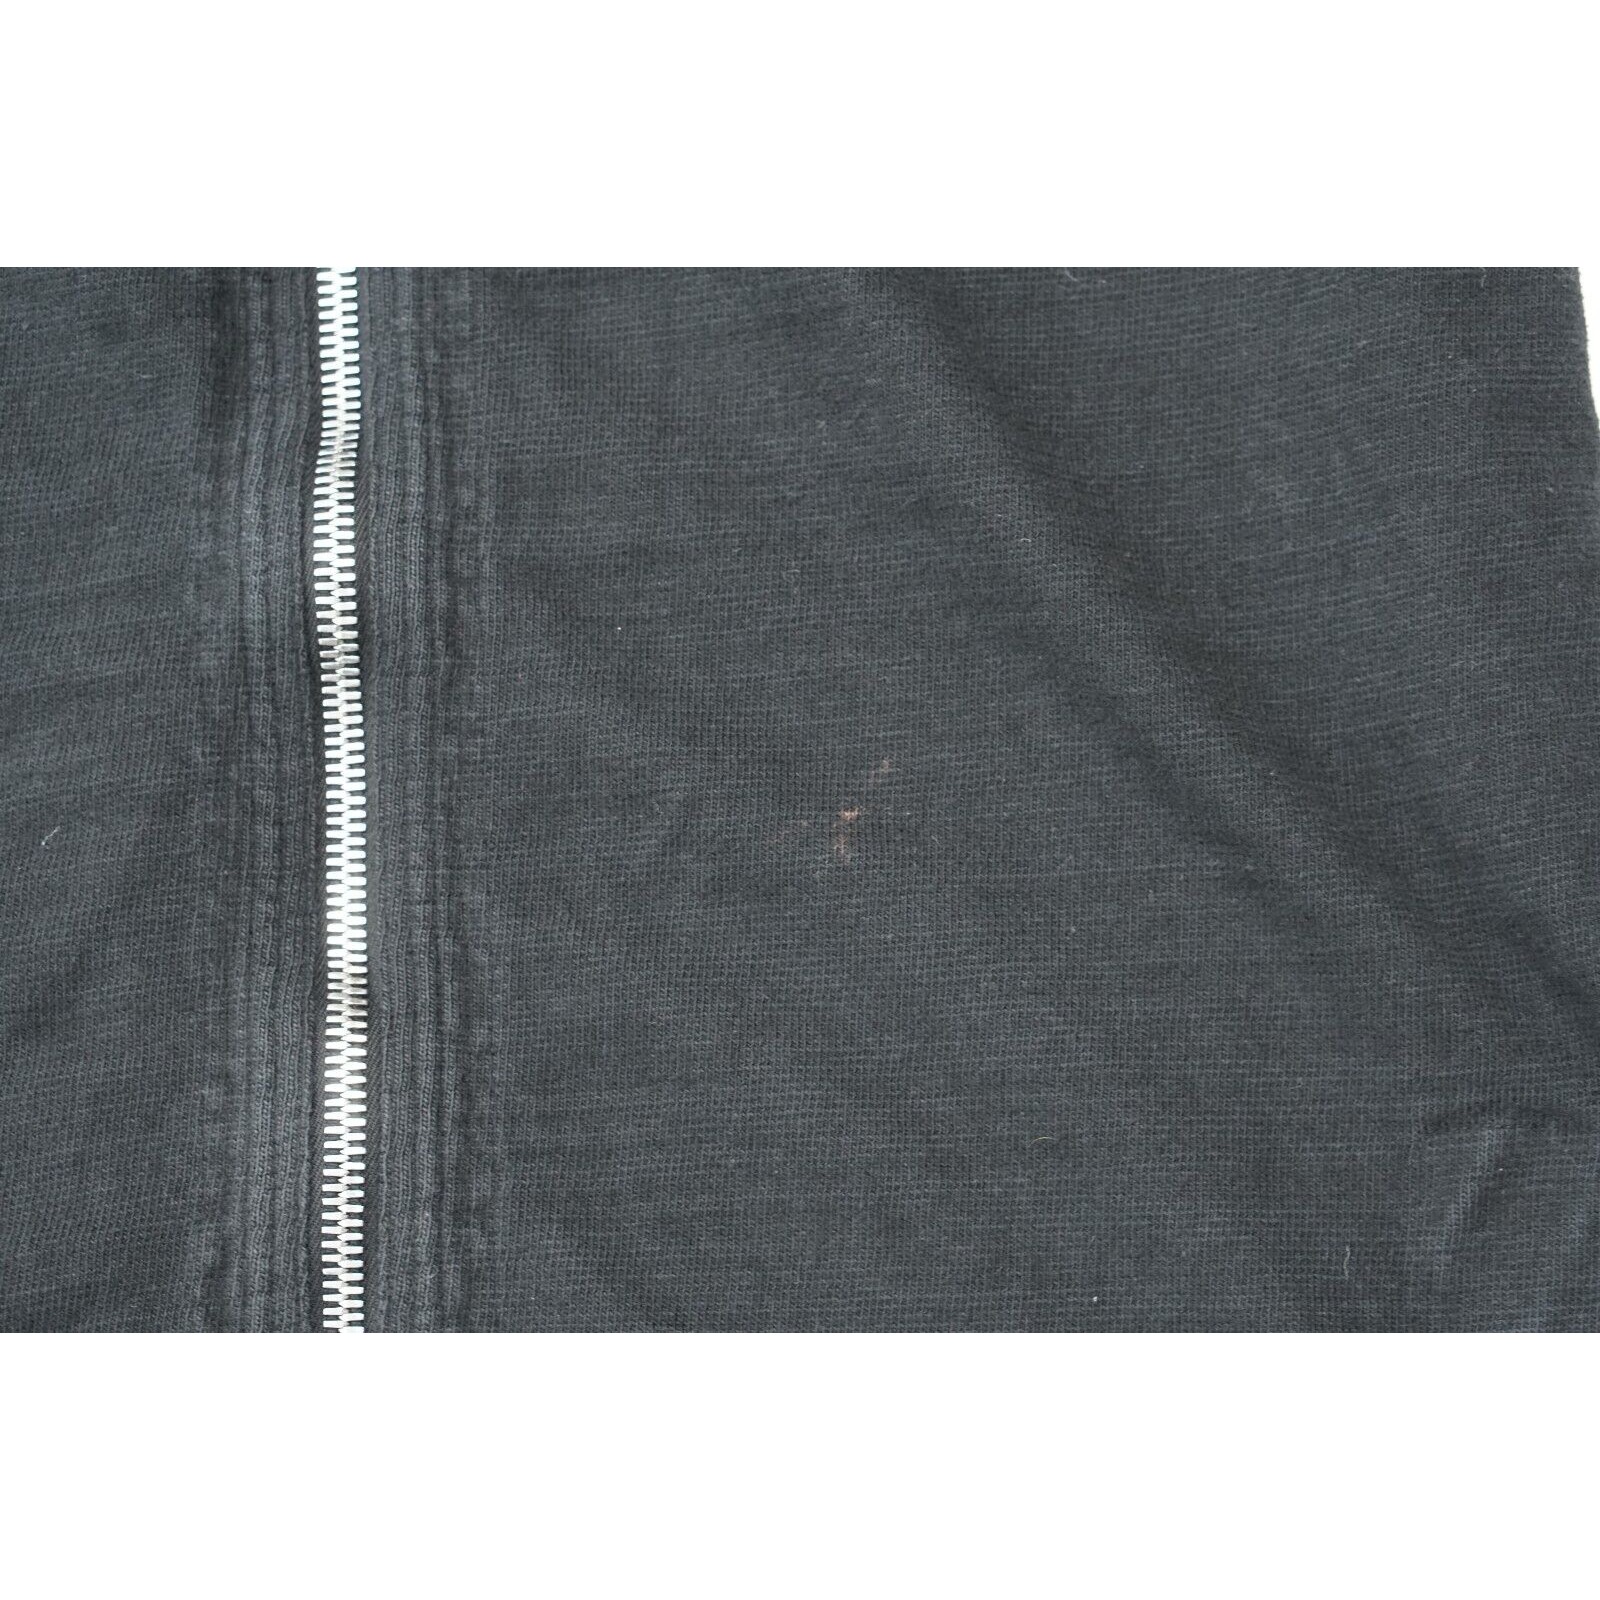 Black Zip Up Sleeveless Jacket Hoodie Cotton - Medium - 5